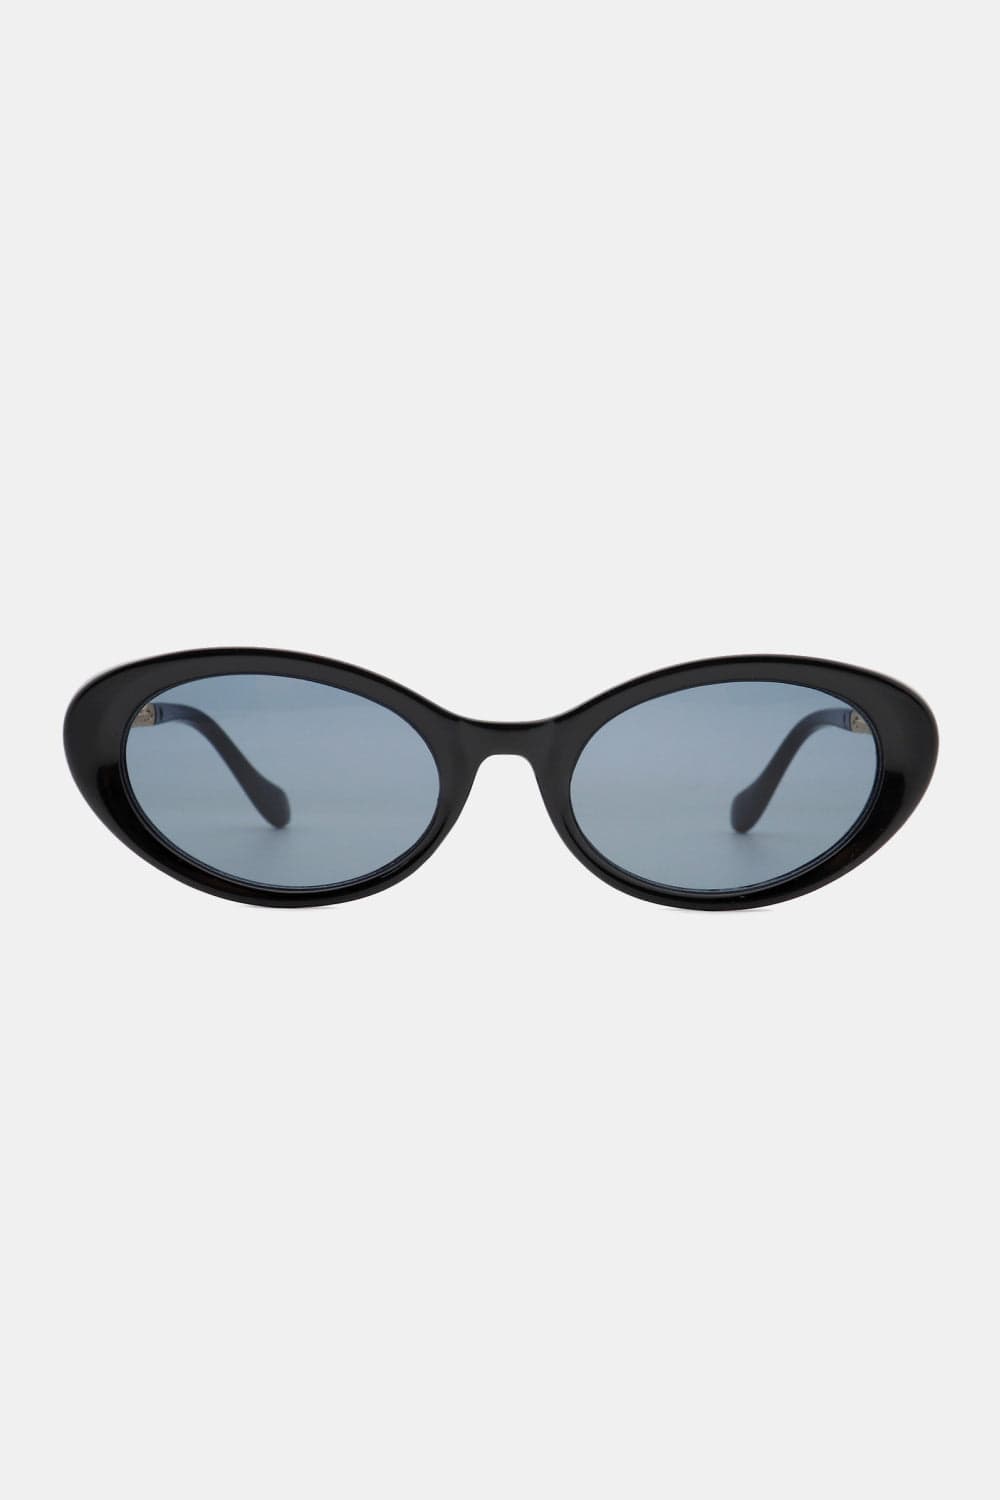 The802Gypsy sunglasses GYPSY-Polycarbonate Frame Cat-Eye Sunglasses